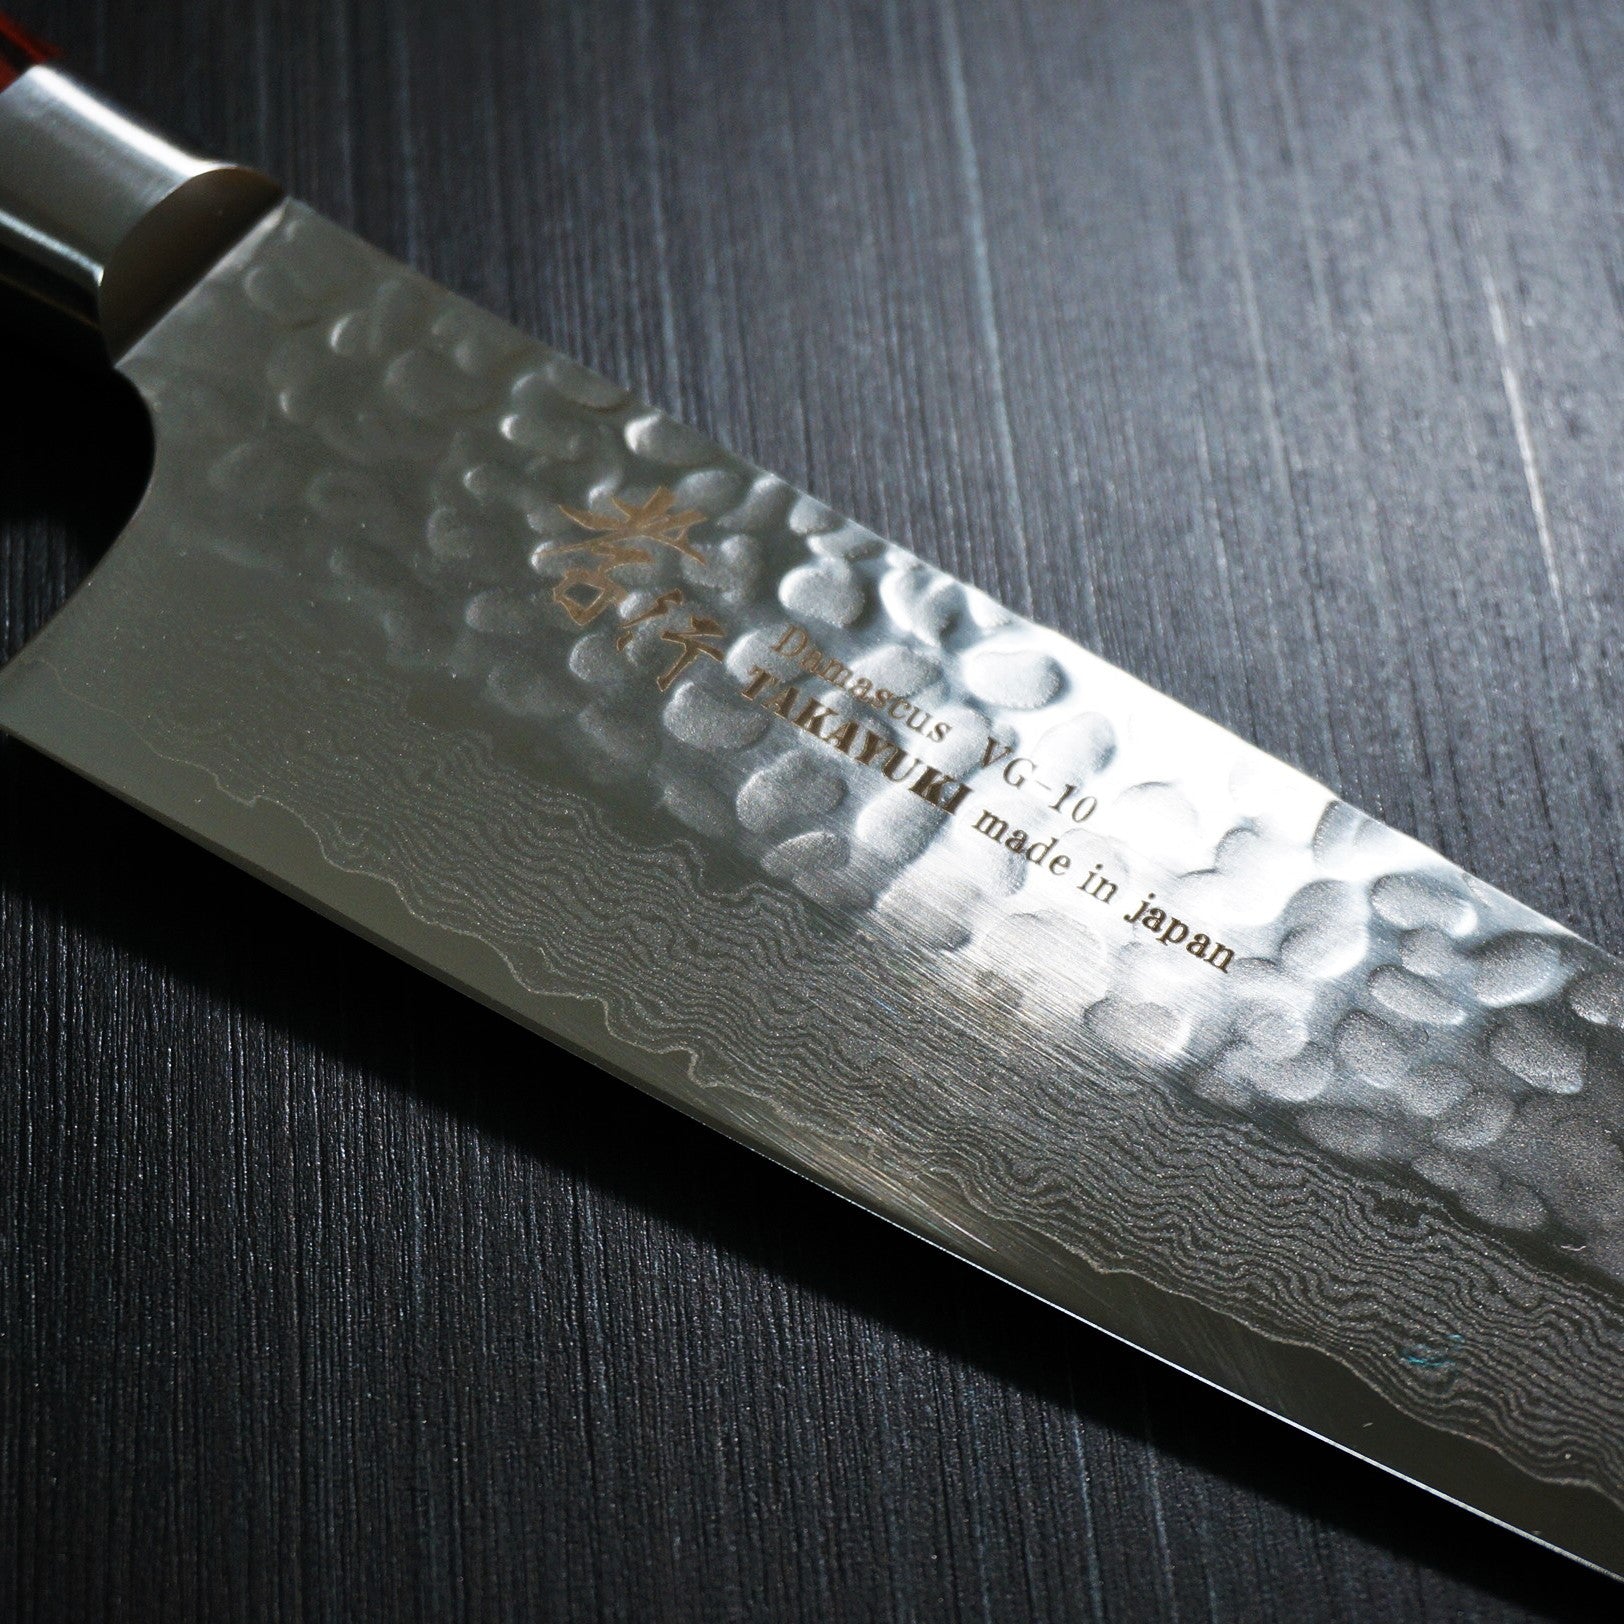 Sakai Takayuki VG-10 33 Layers Hammered Damascus Steak Knife 120